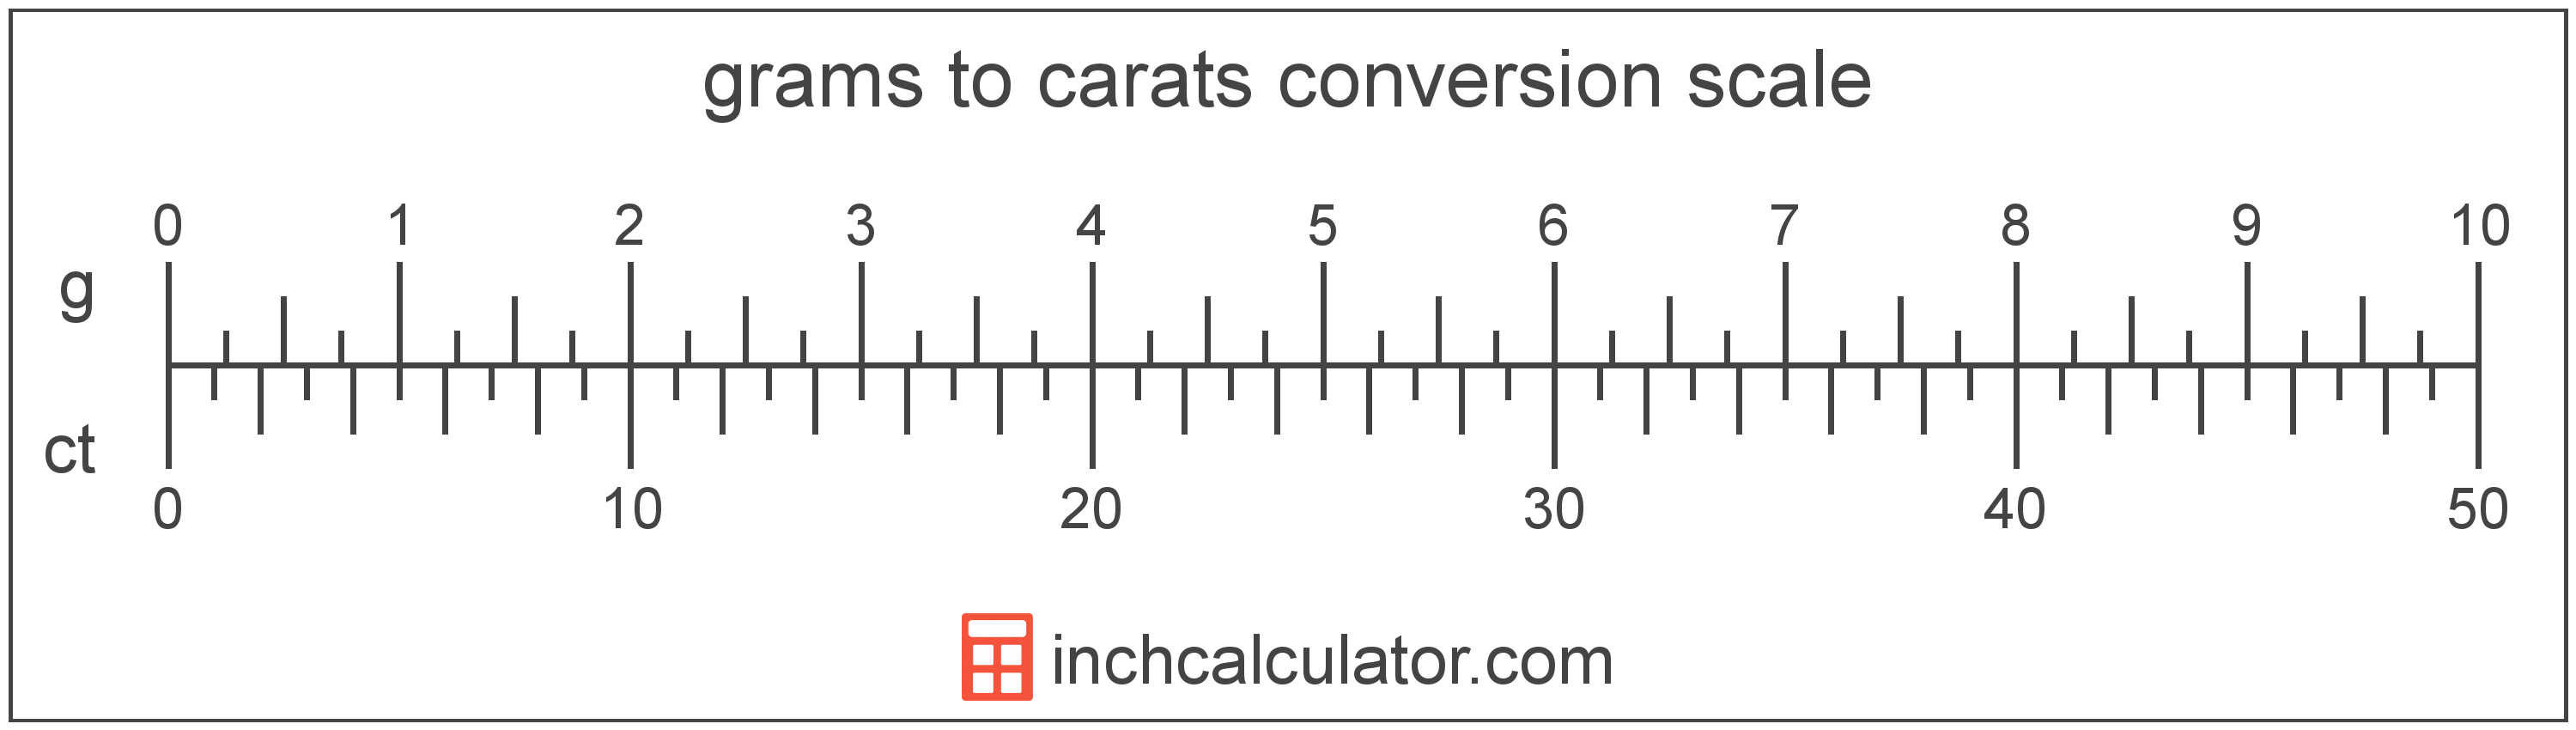 Carat Conversion Chart